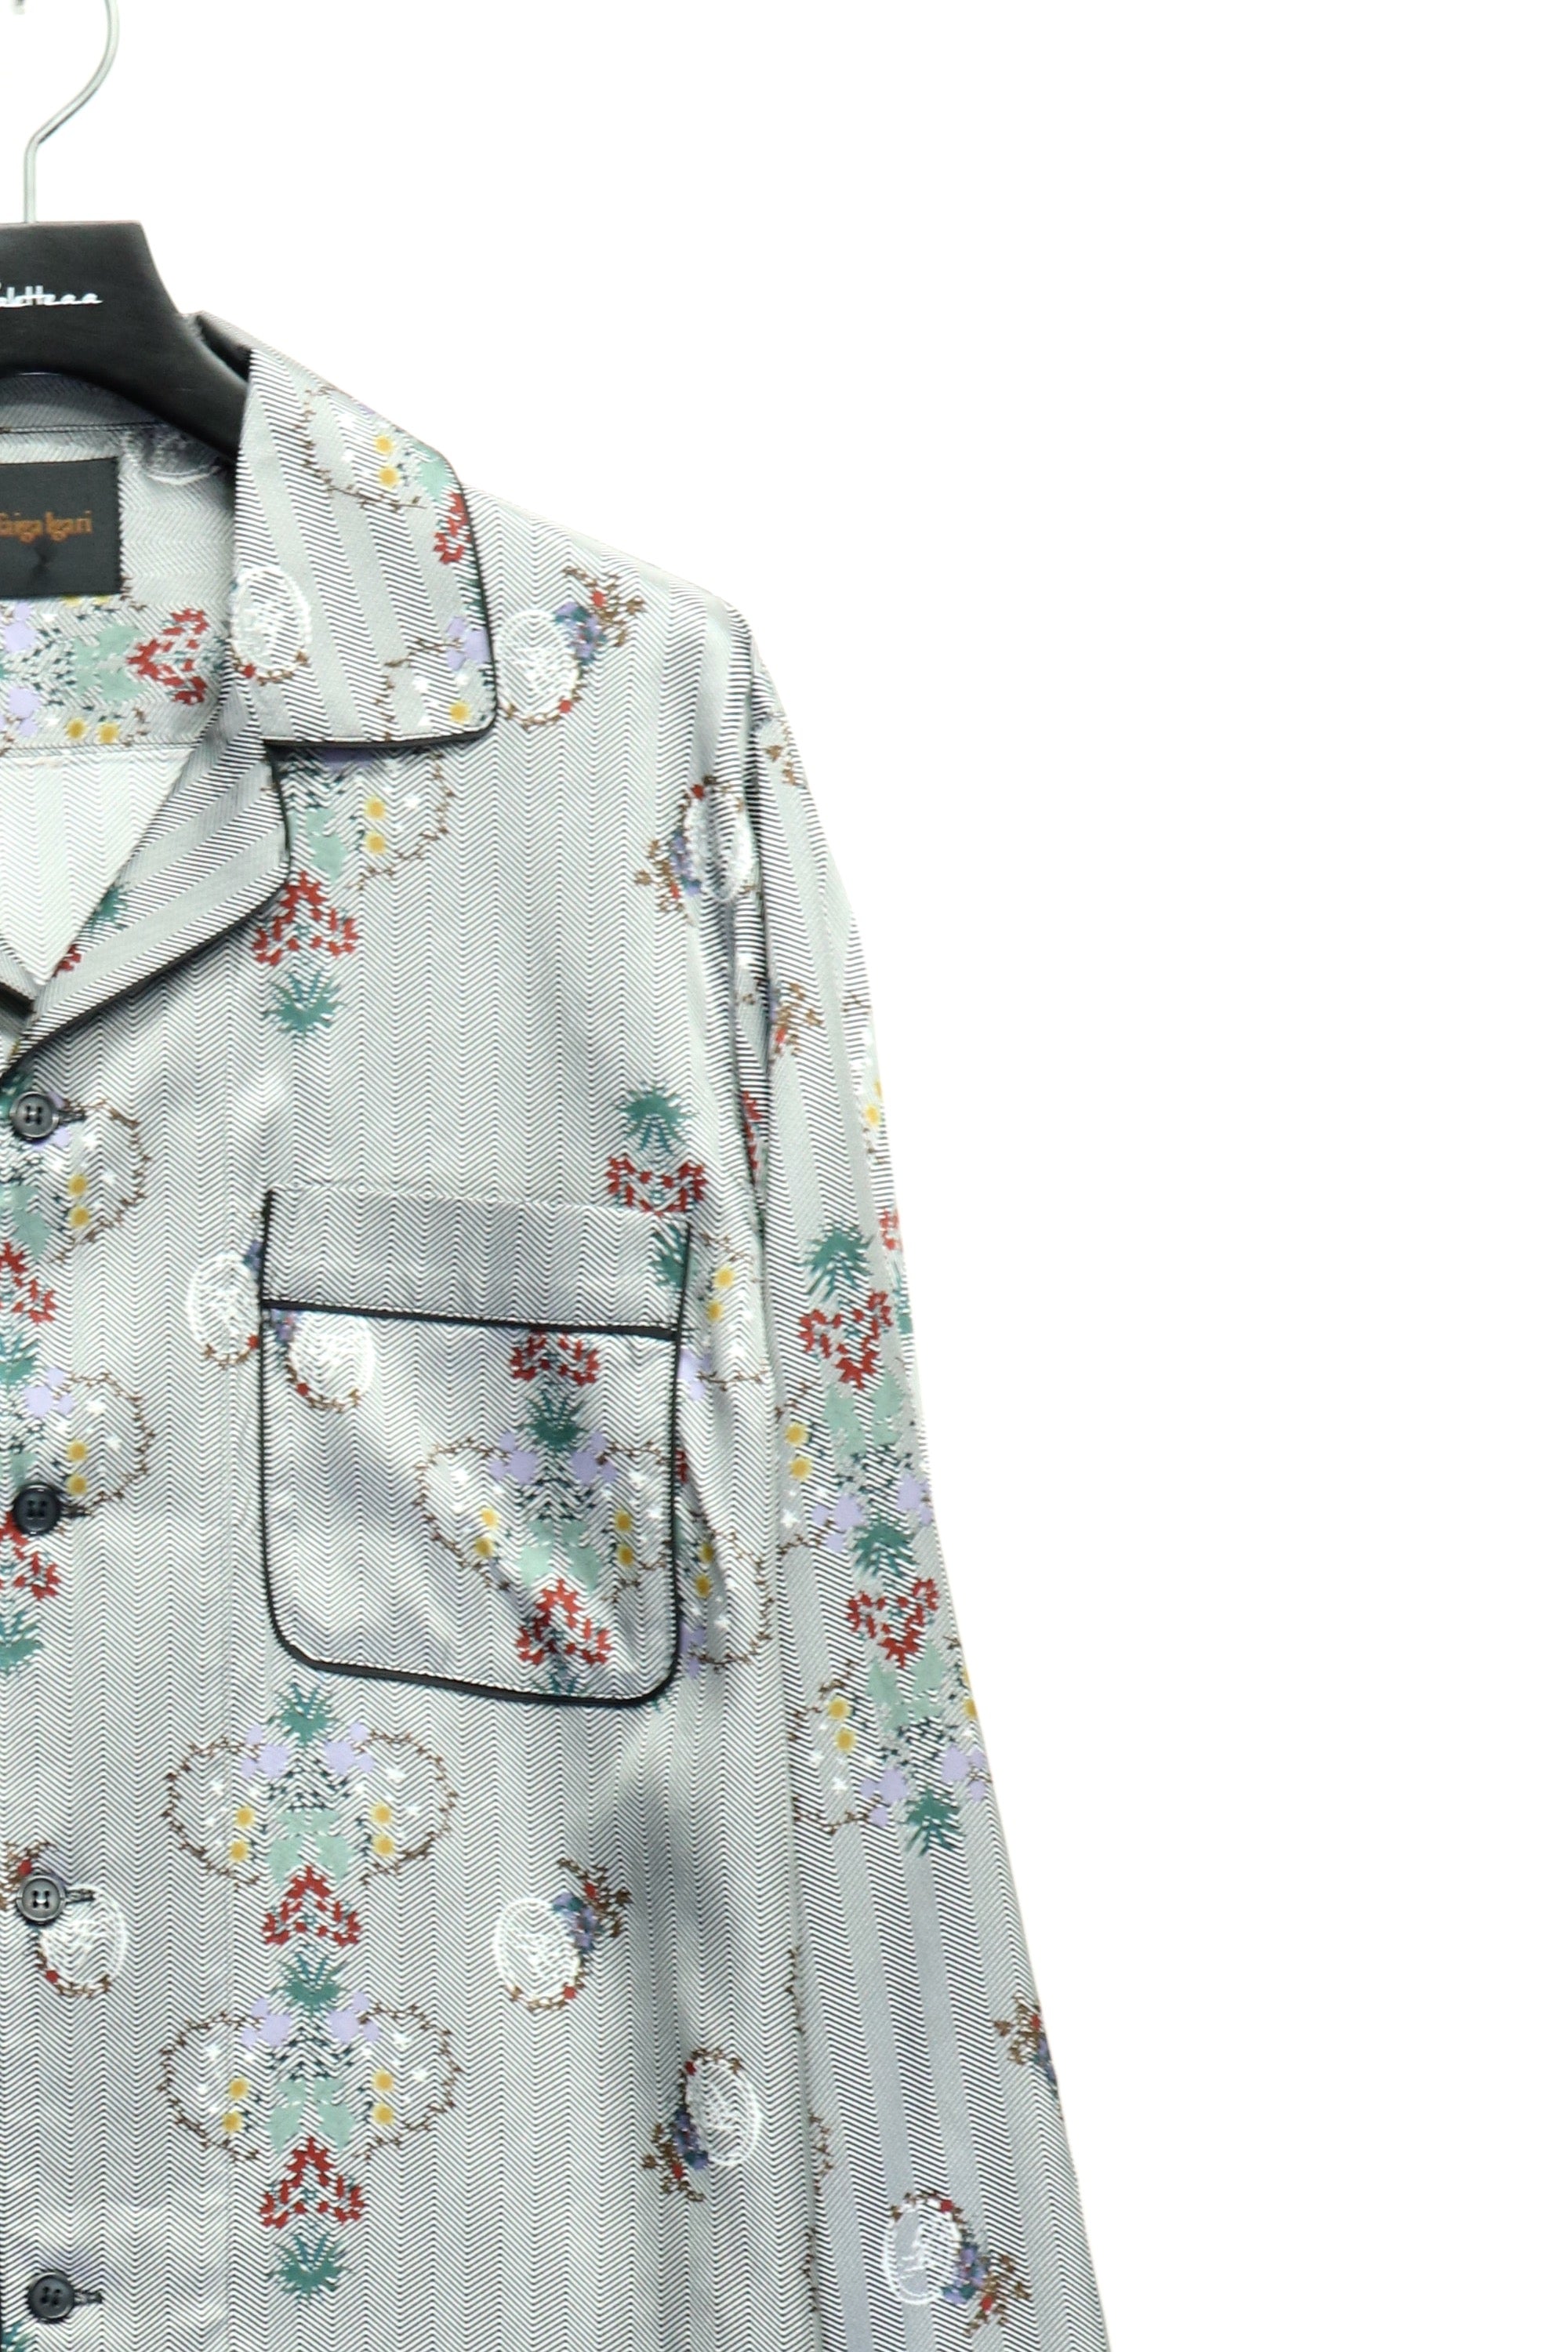 Taiga Igari(タイガ イガリ)の22aw Dairy Pajamas Shirtの通販